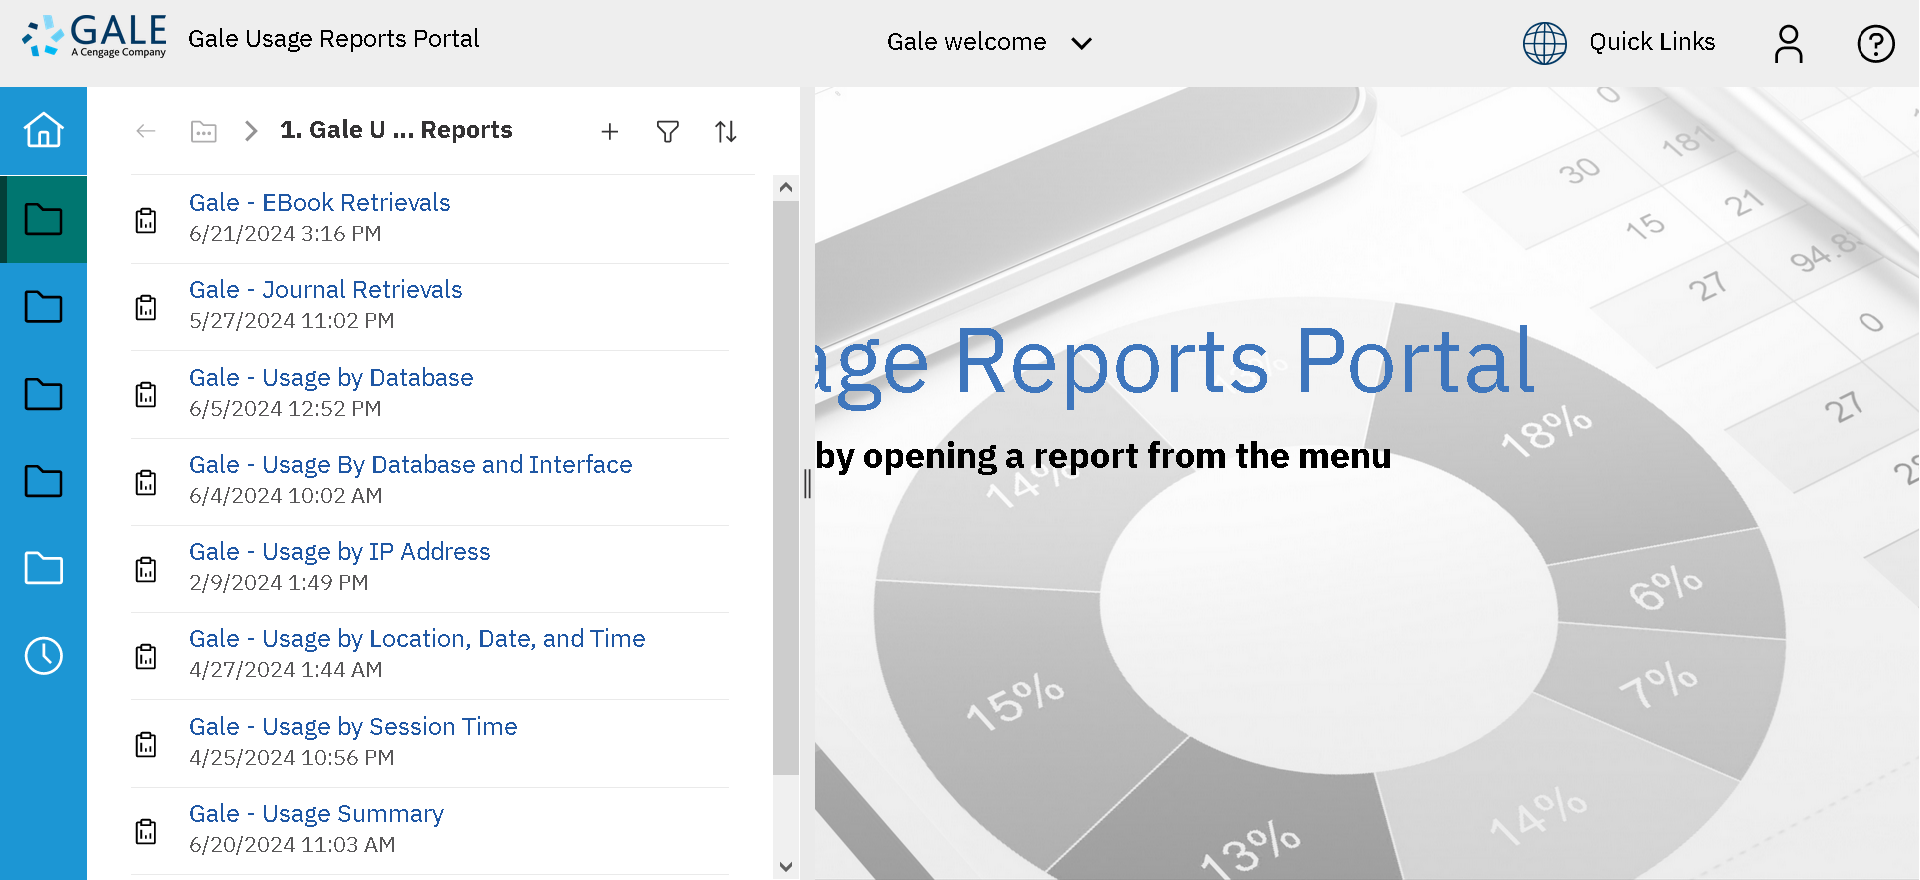 Gale Usage Reports Portal - Gale Usage Menu